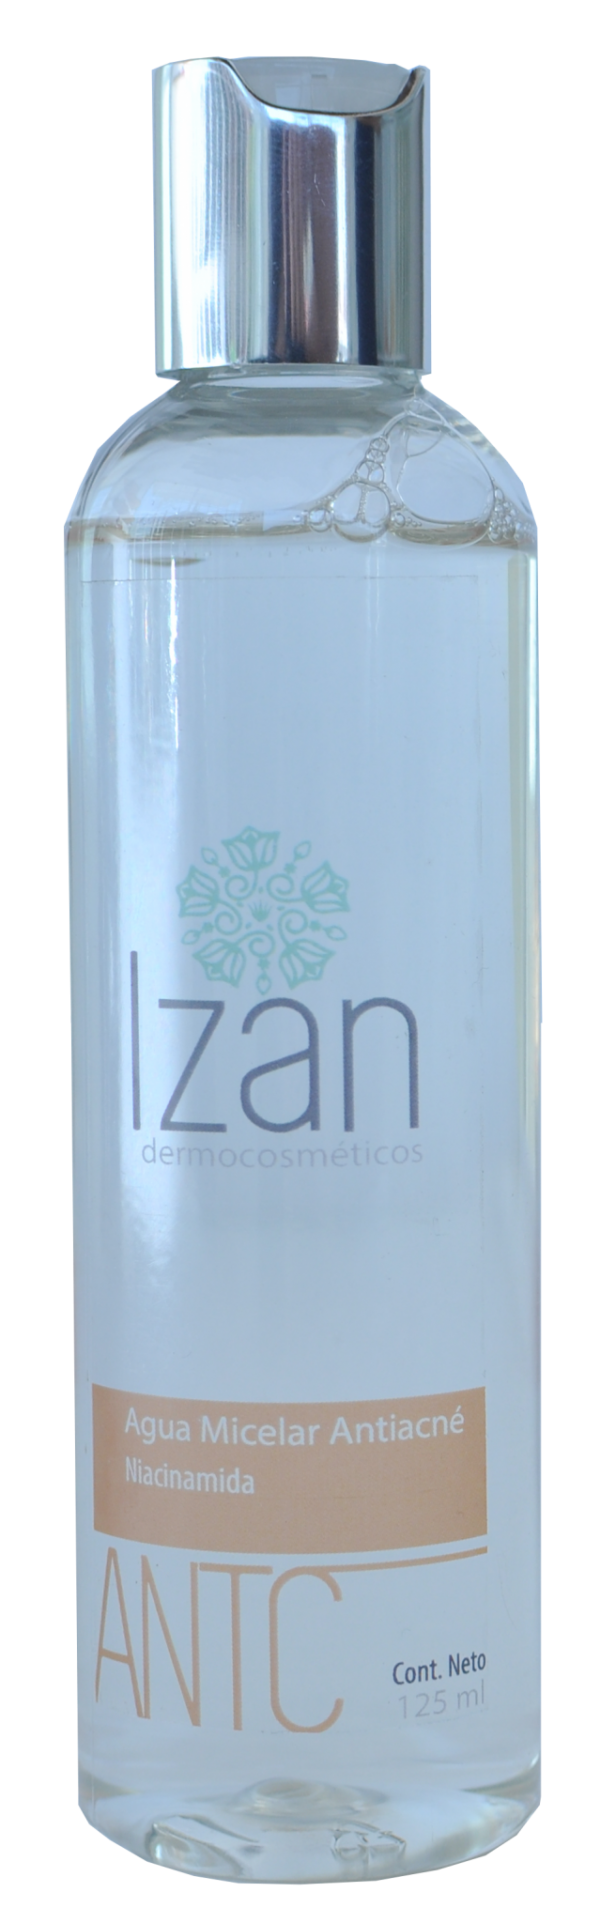 Agua Micelar Antiacné IZAN Dermocosméticos productos